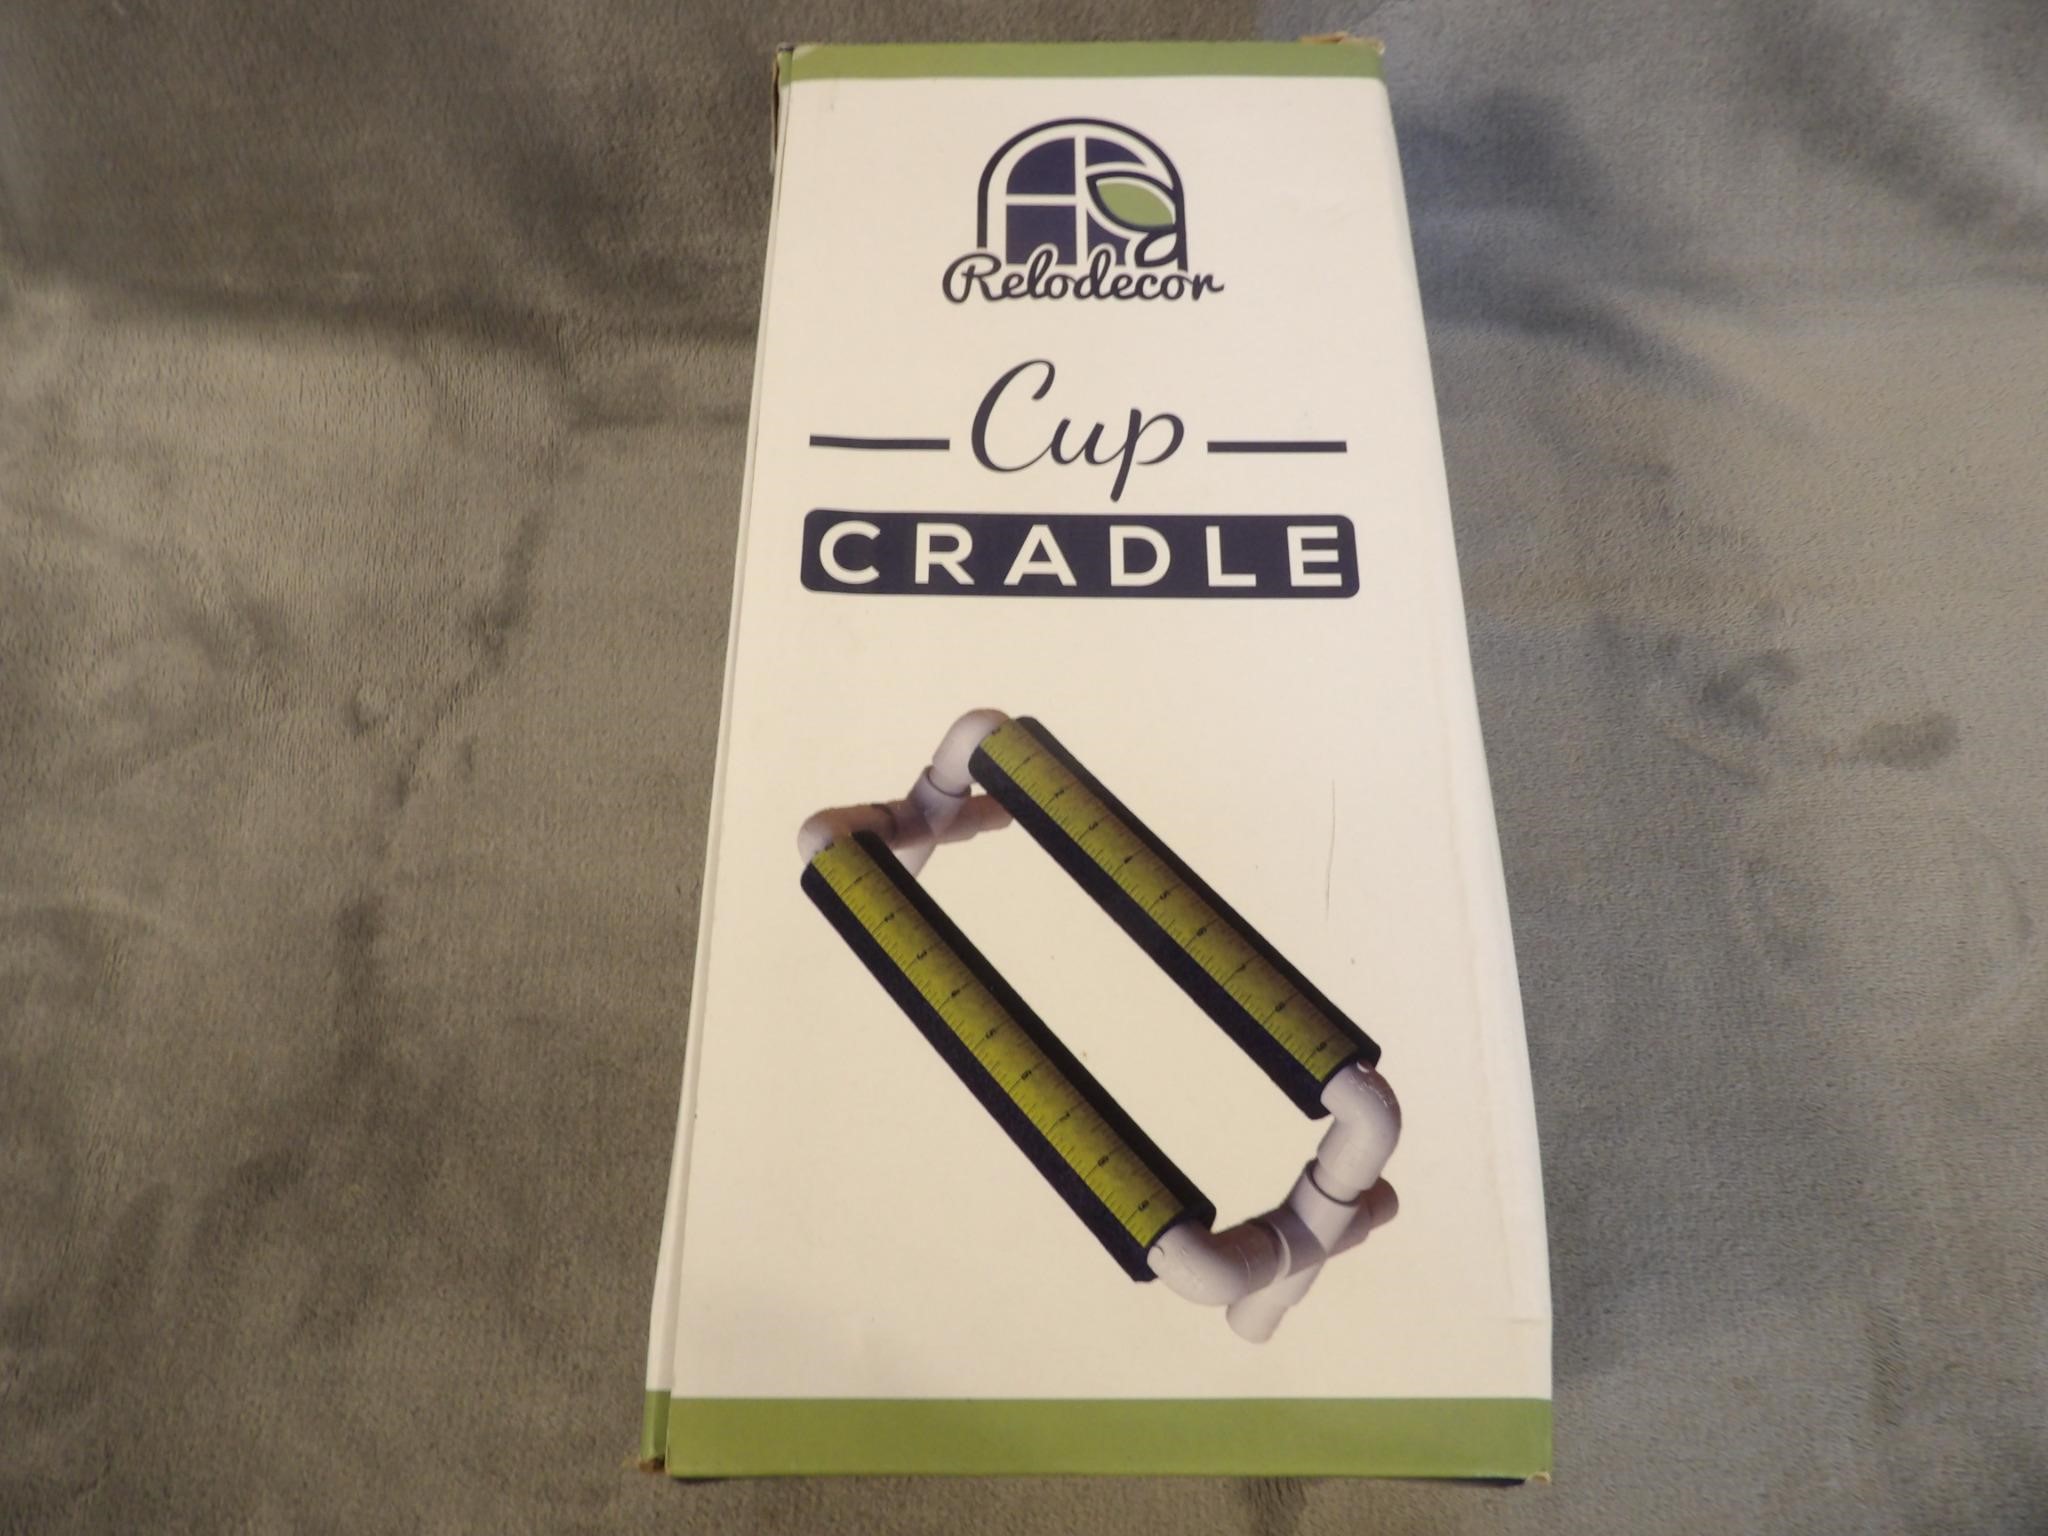 Cup Cradle